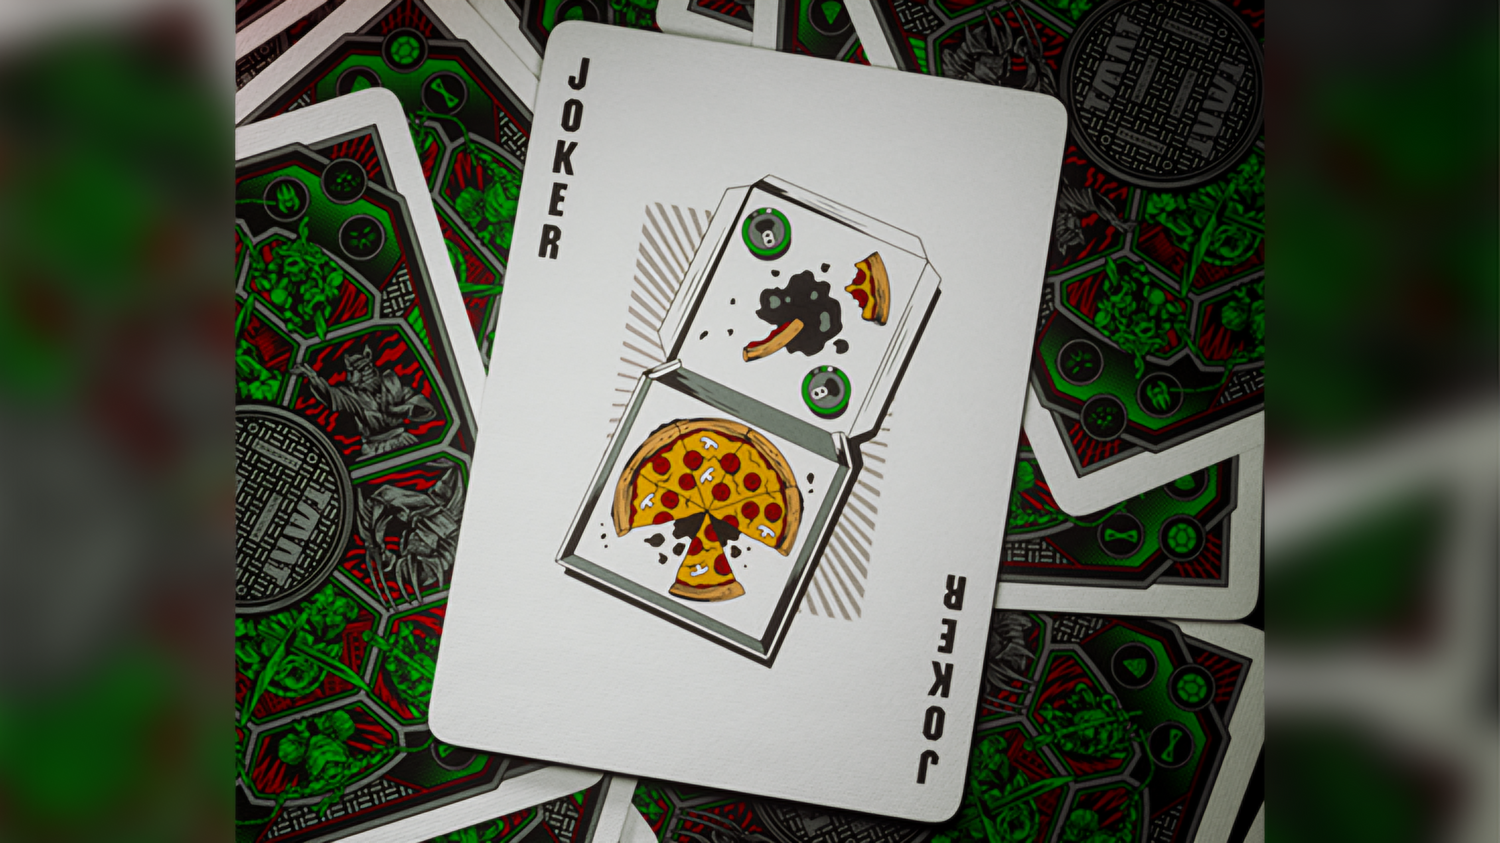 Teenage Mutant Ninja Turtles by theory11 : Playing cards, Poker, Magic, Cardistry,singapore